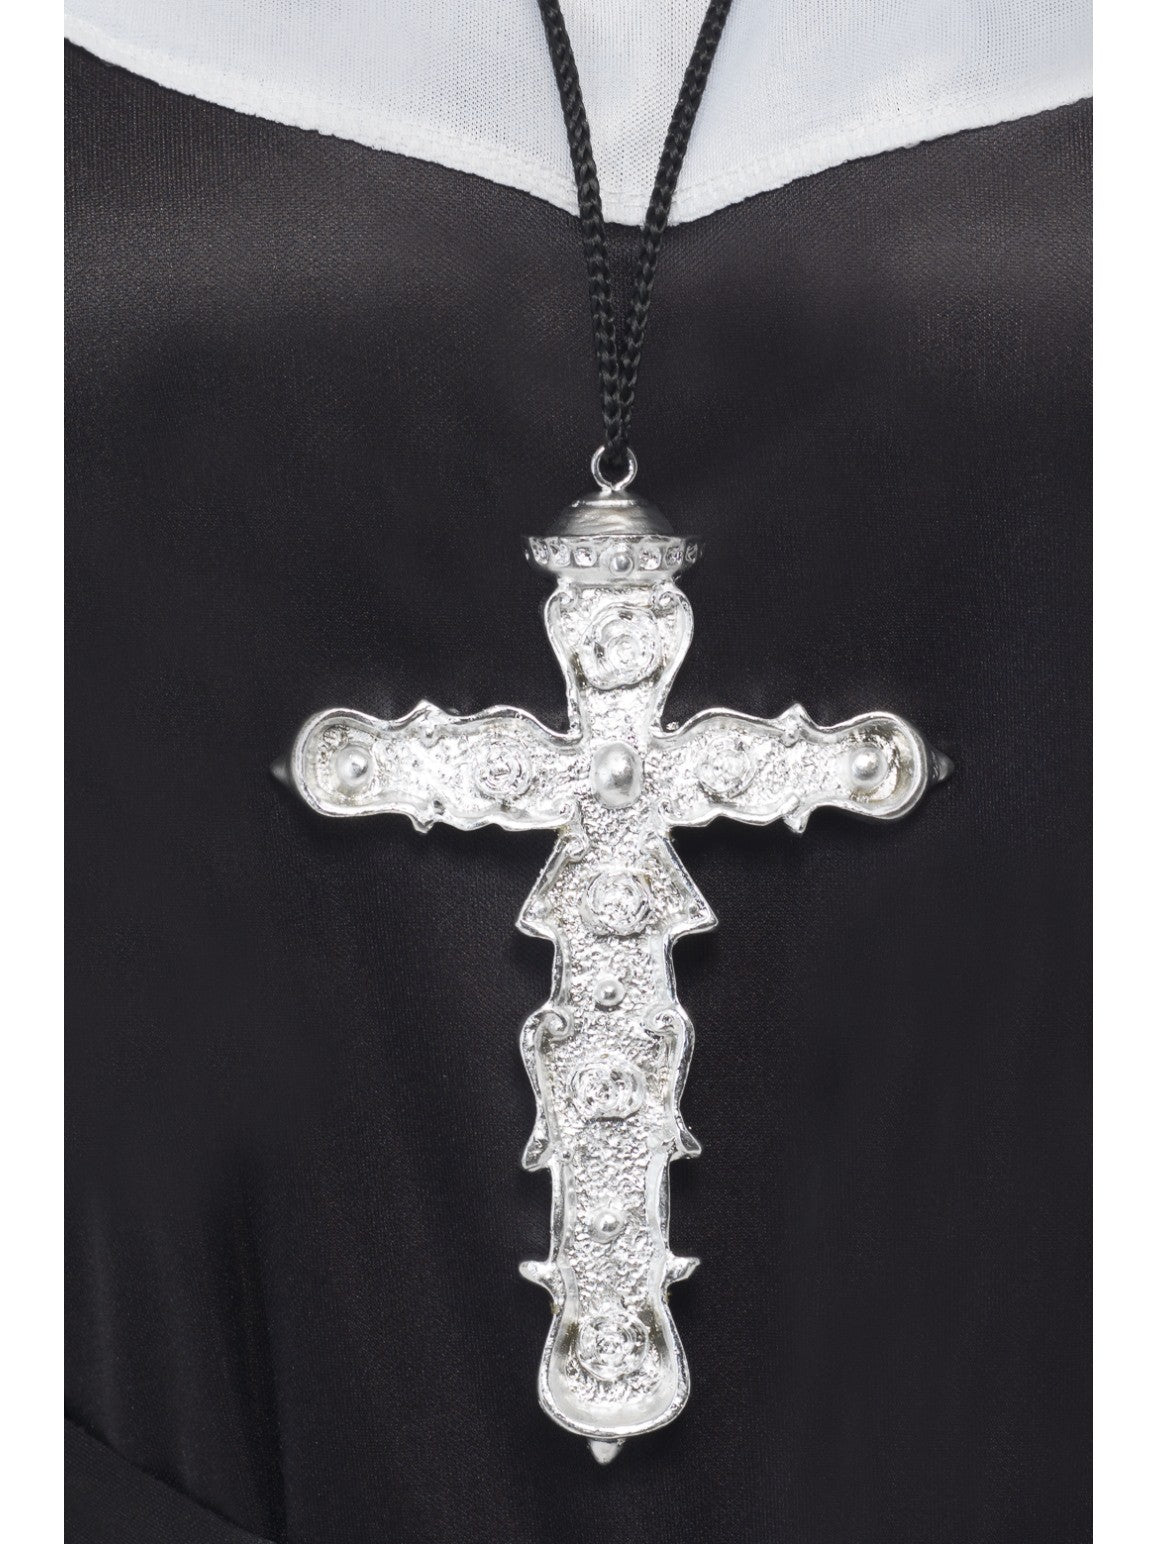 Ornate Silver Cross Necklace